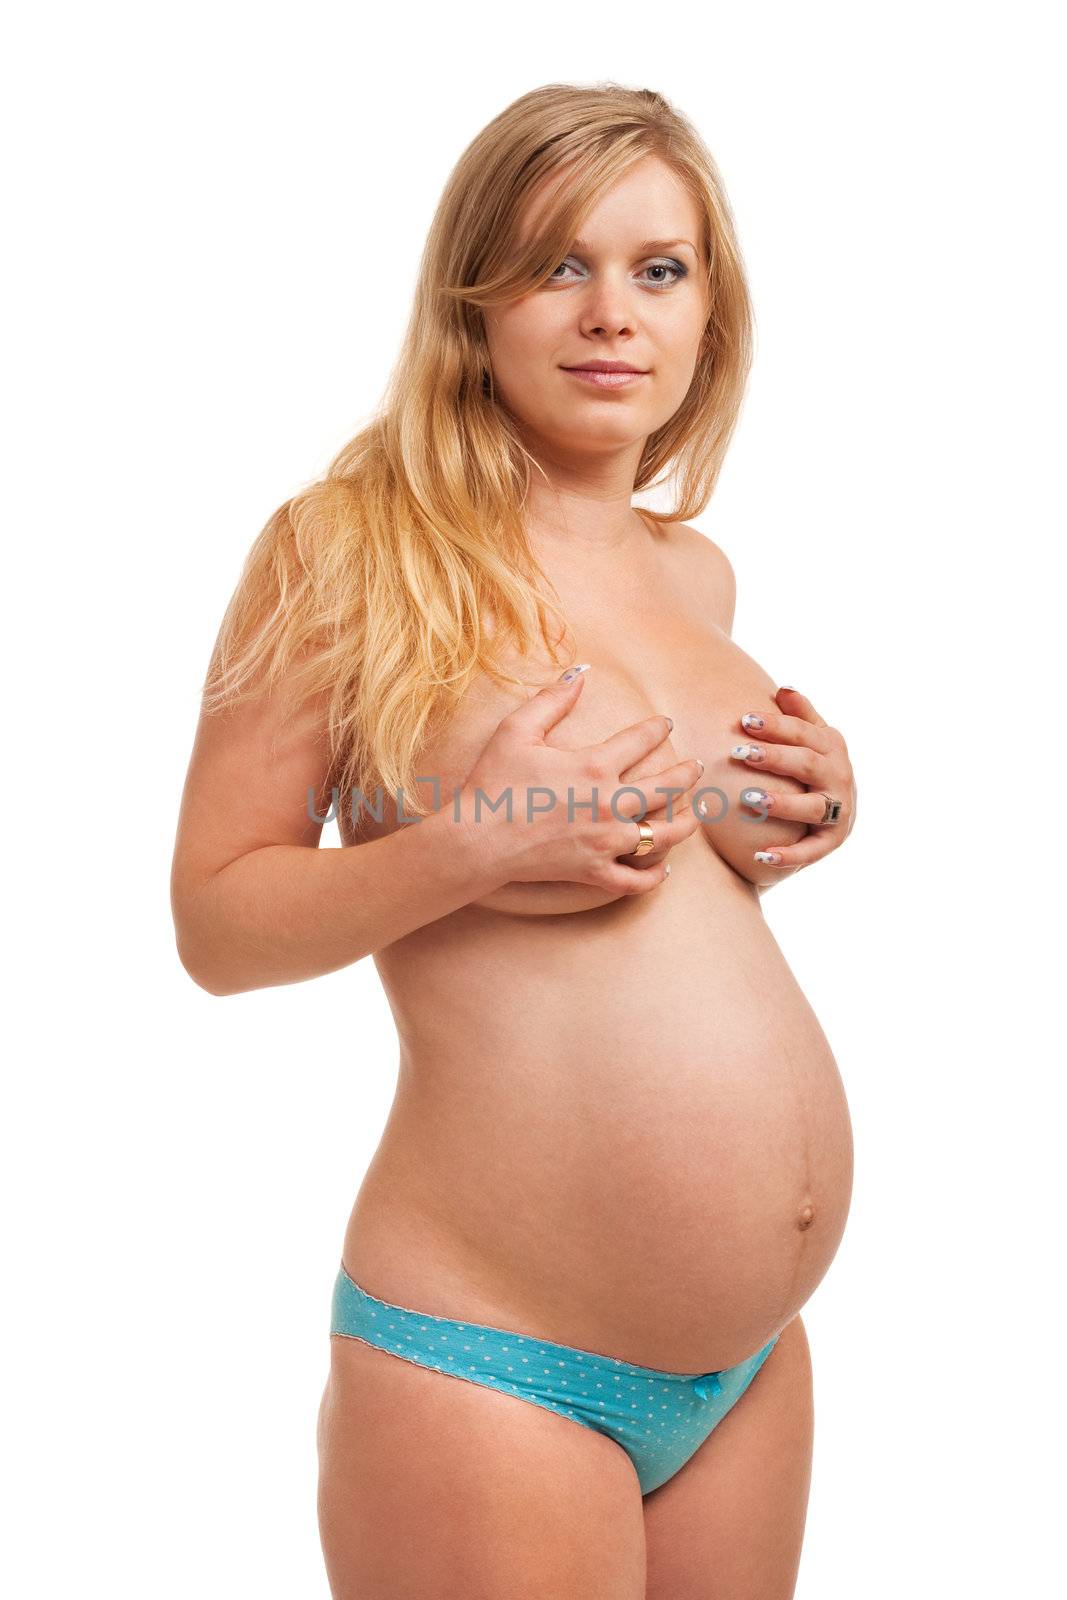 Beautiful pregnant woman by igor_stramyk